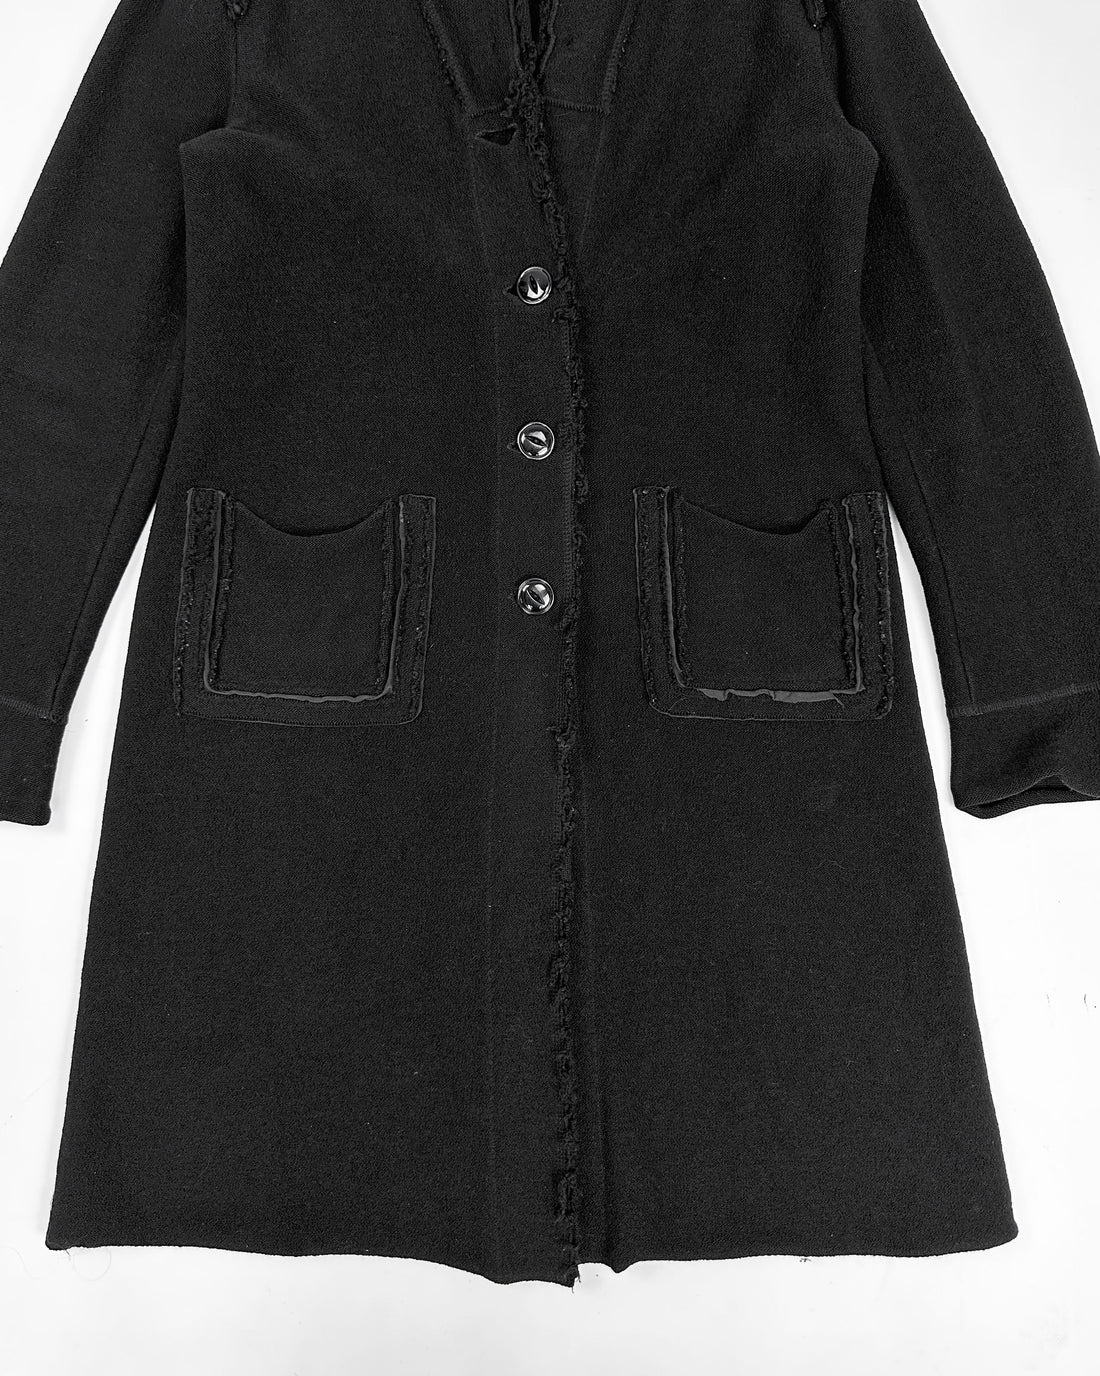 Marithé Francois Girbaud Black Distressed Long Jacket 2000's